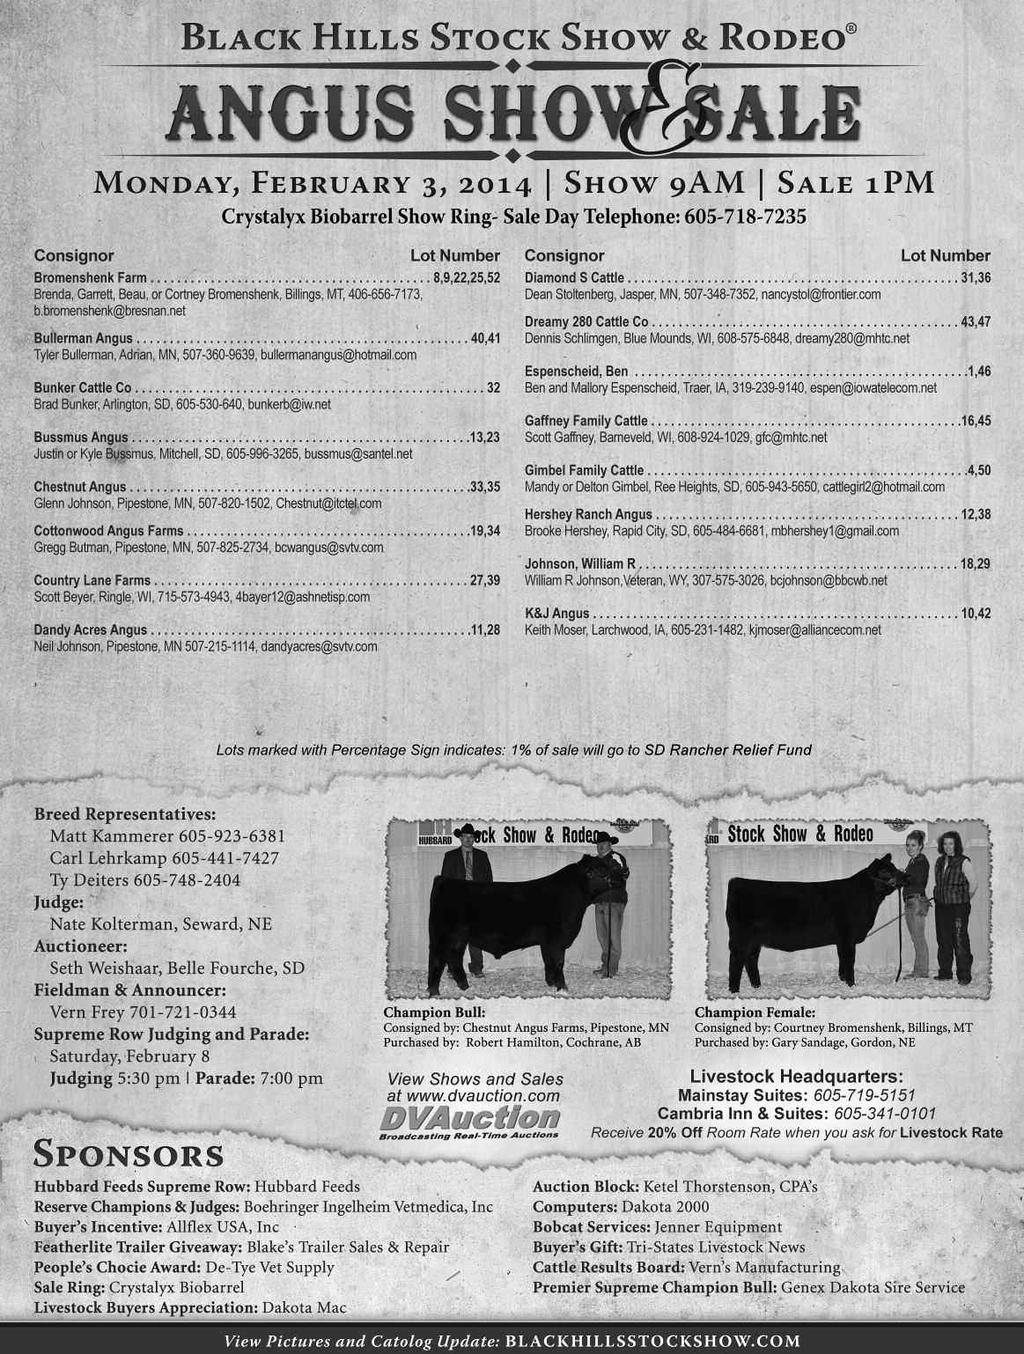 Angus 40 BHSS Livestock & Event Guide A